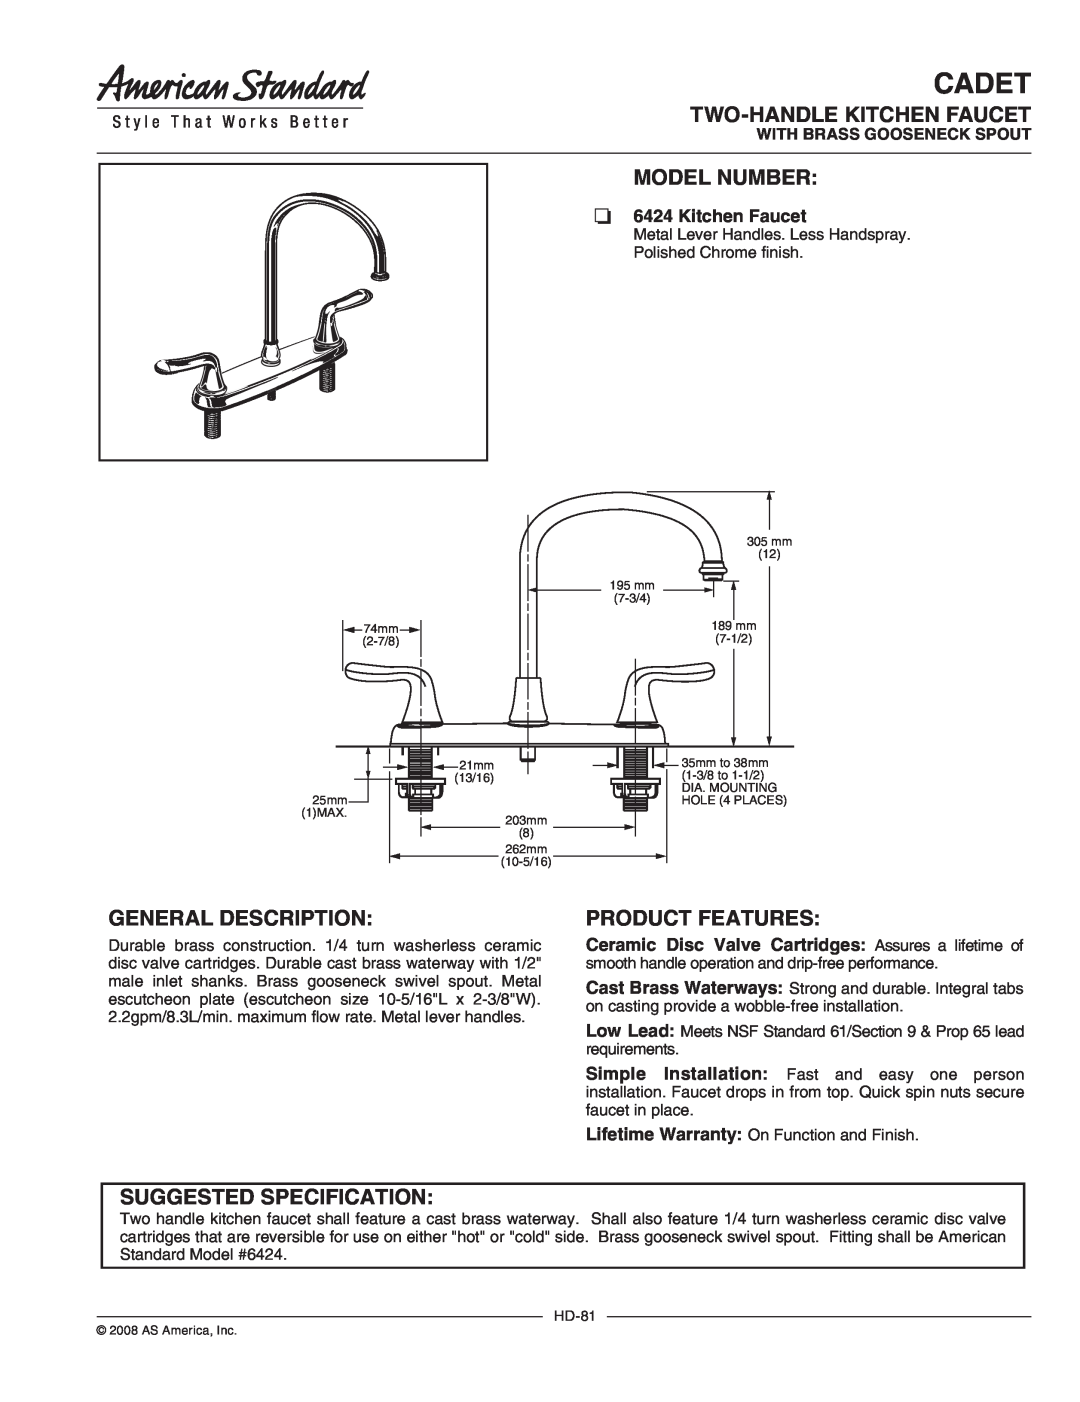 American Standard 6424 warranty Cadet, Two-Handlekitchen Faucet, Model Number, General Description, Product Features 